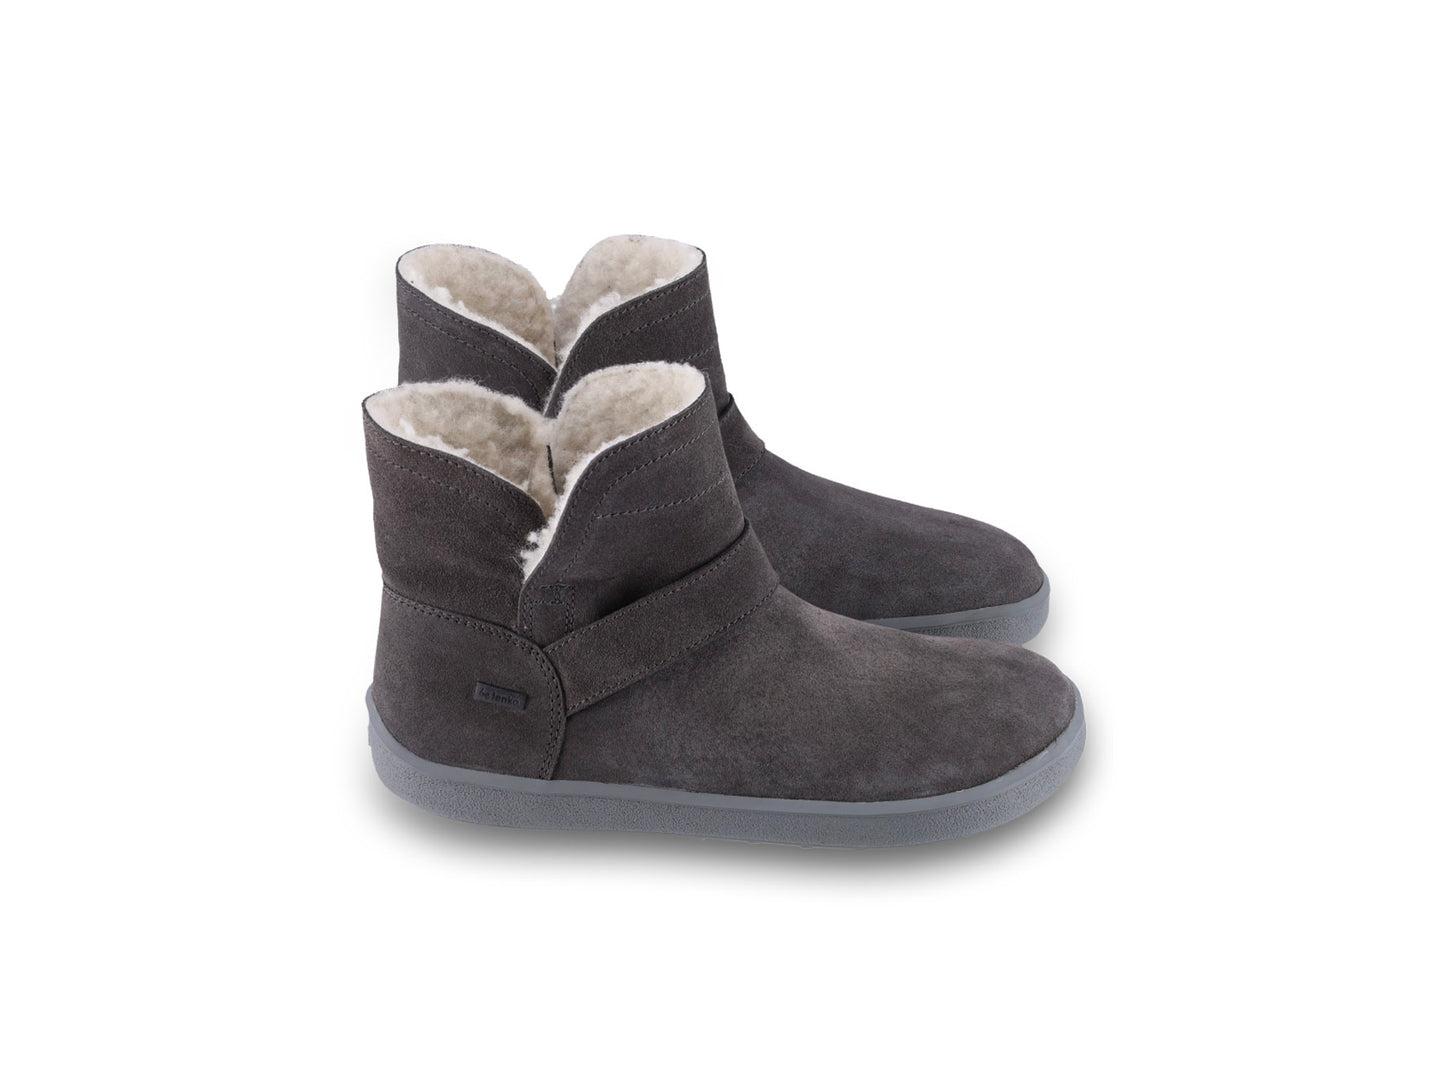 Be Lenka Polaris Barefoot Boots - All Grey